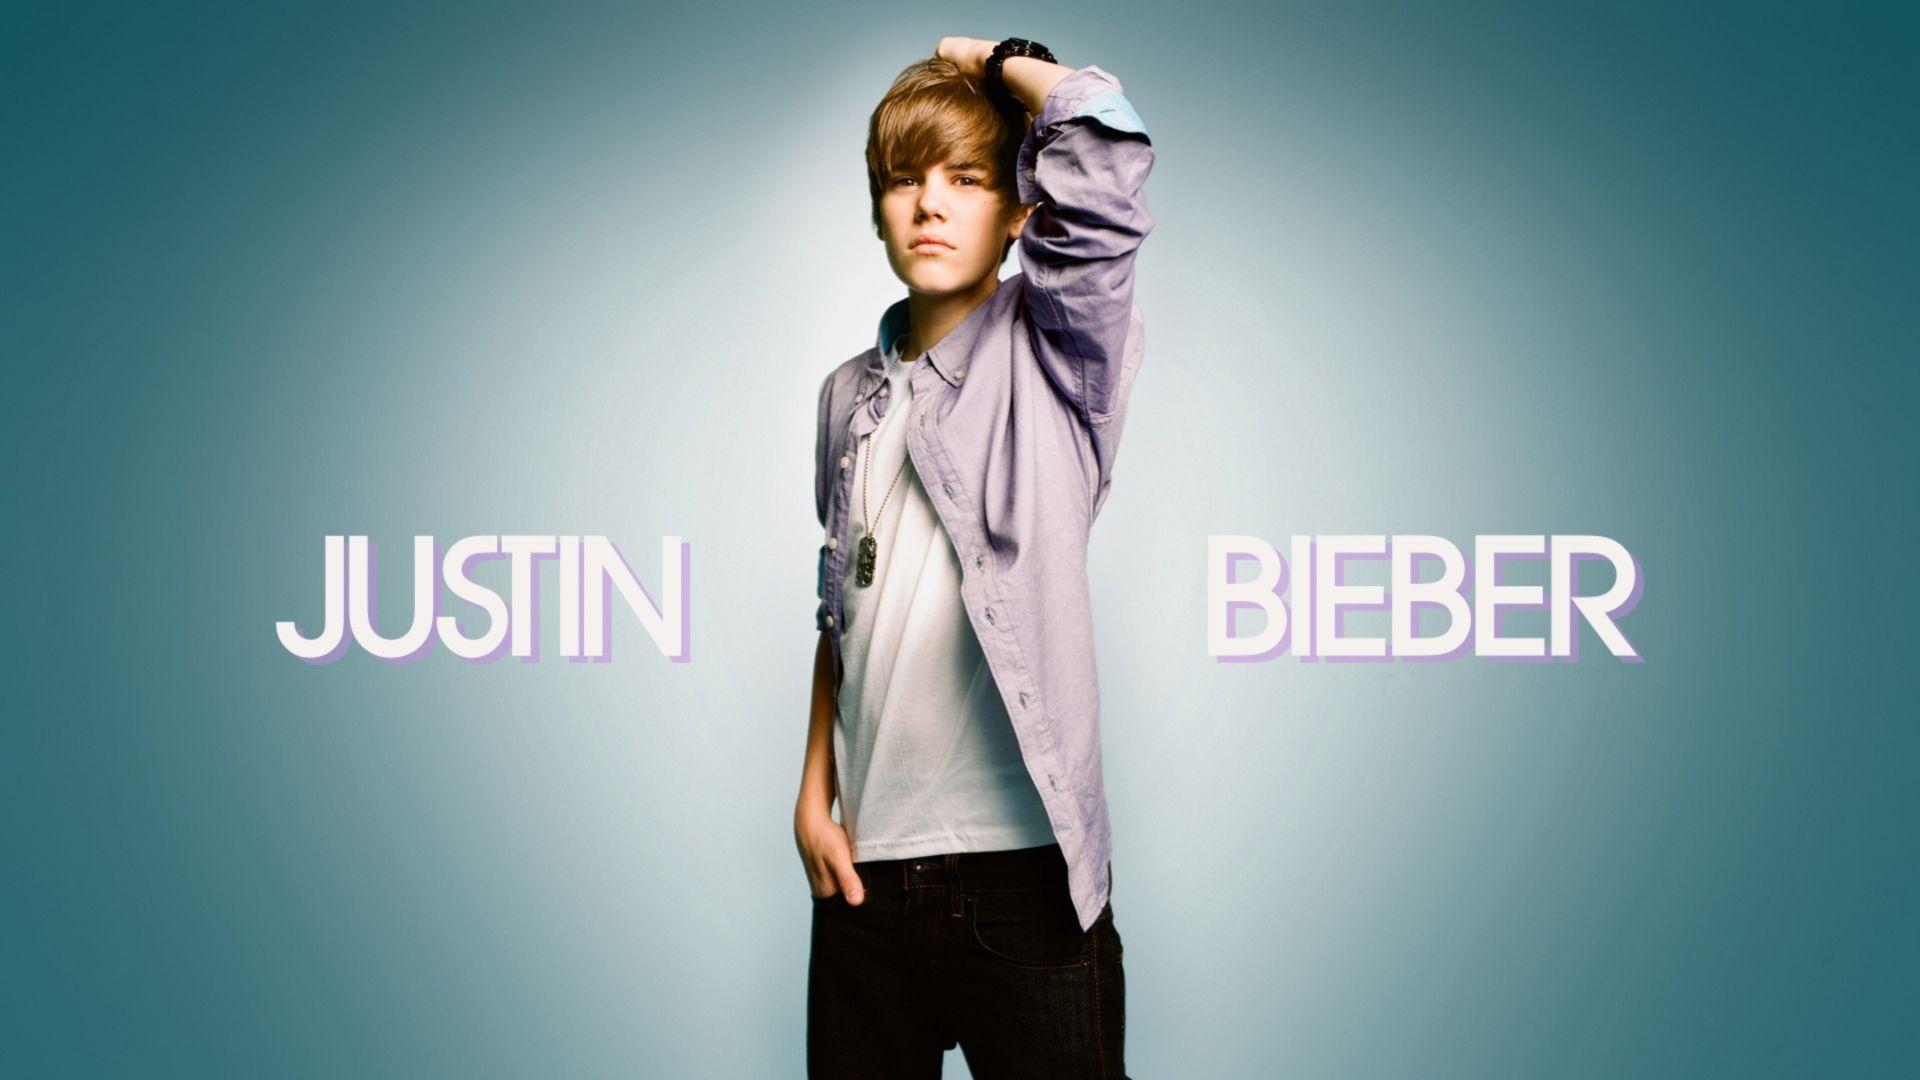 Cool Justin Bieber Background. Wallpaper, Background, Image